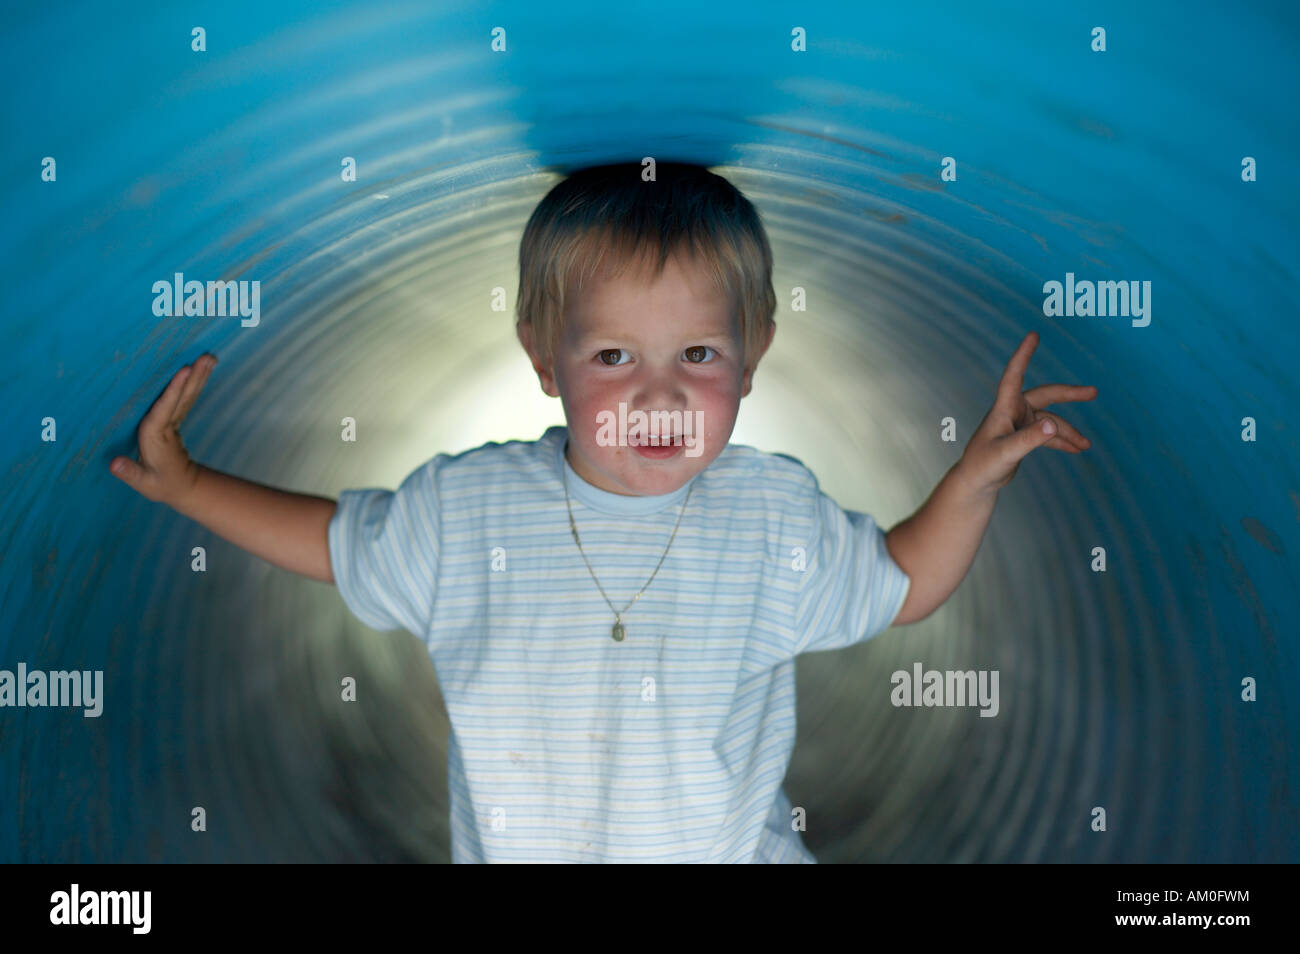 Small boy walks through an underground play tunnel Stock Photo